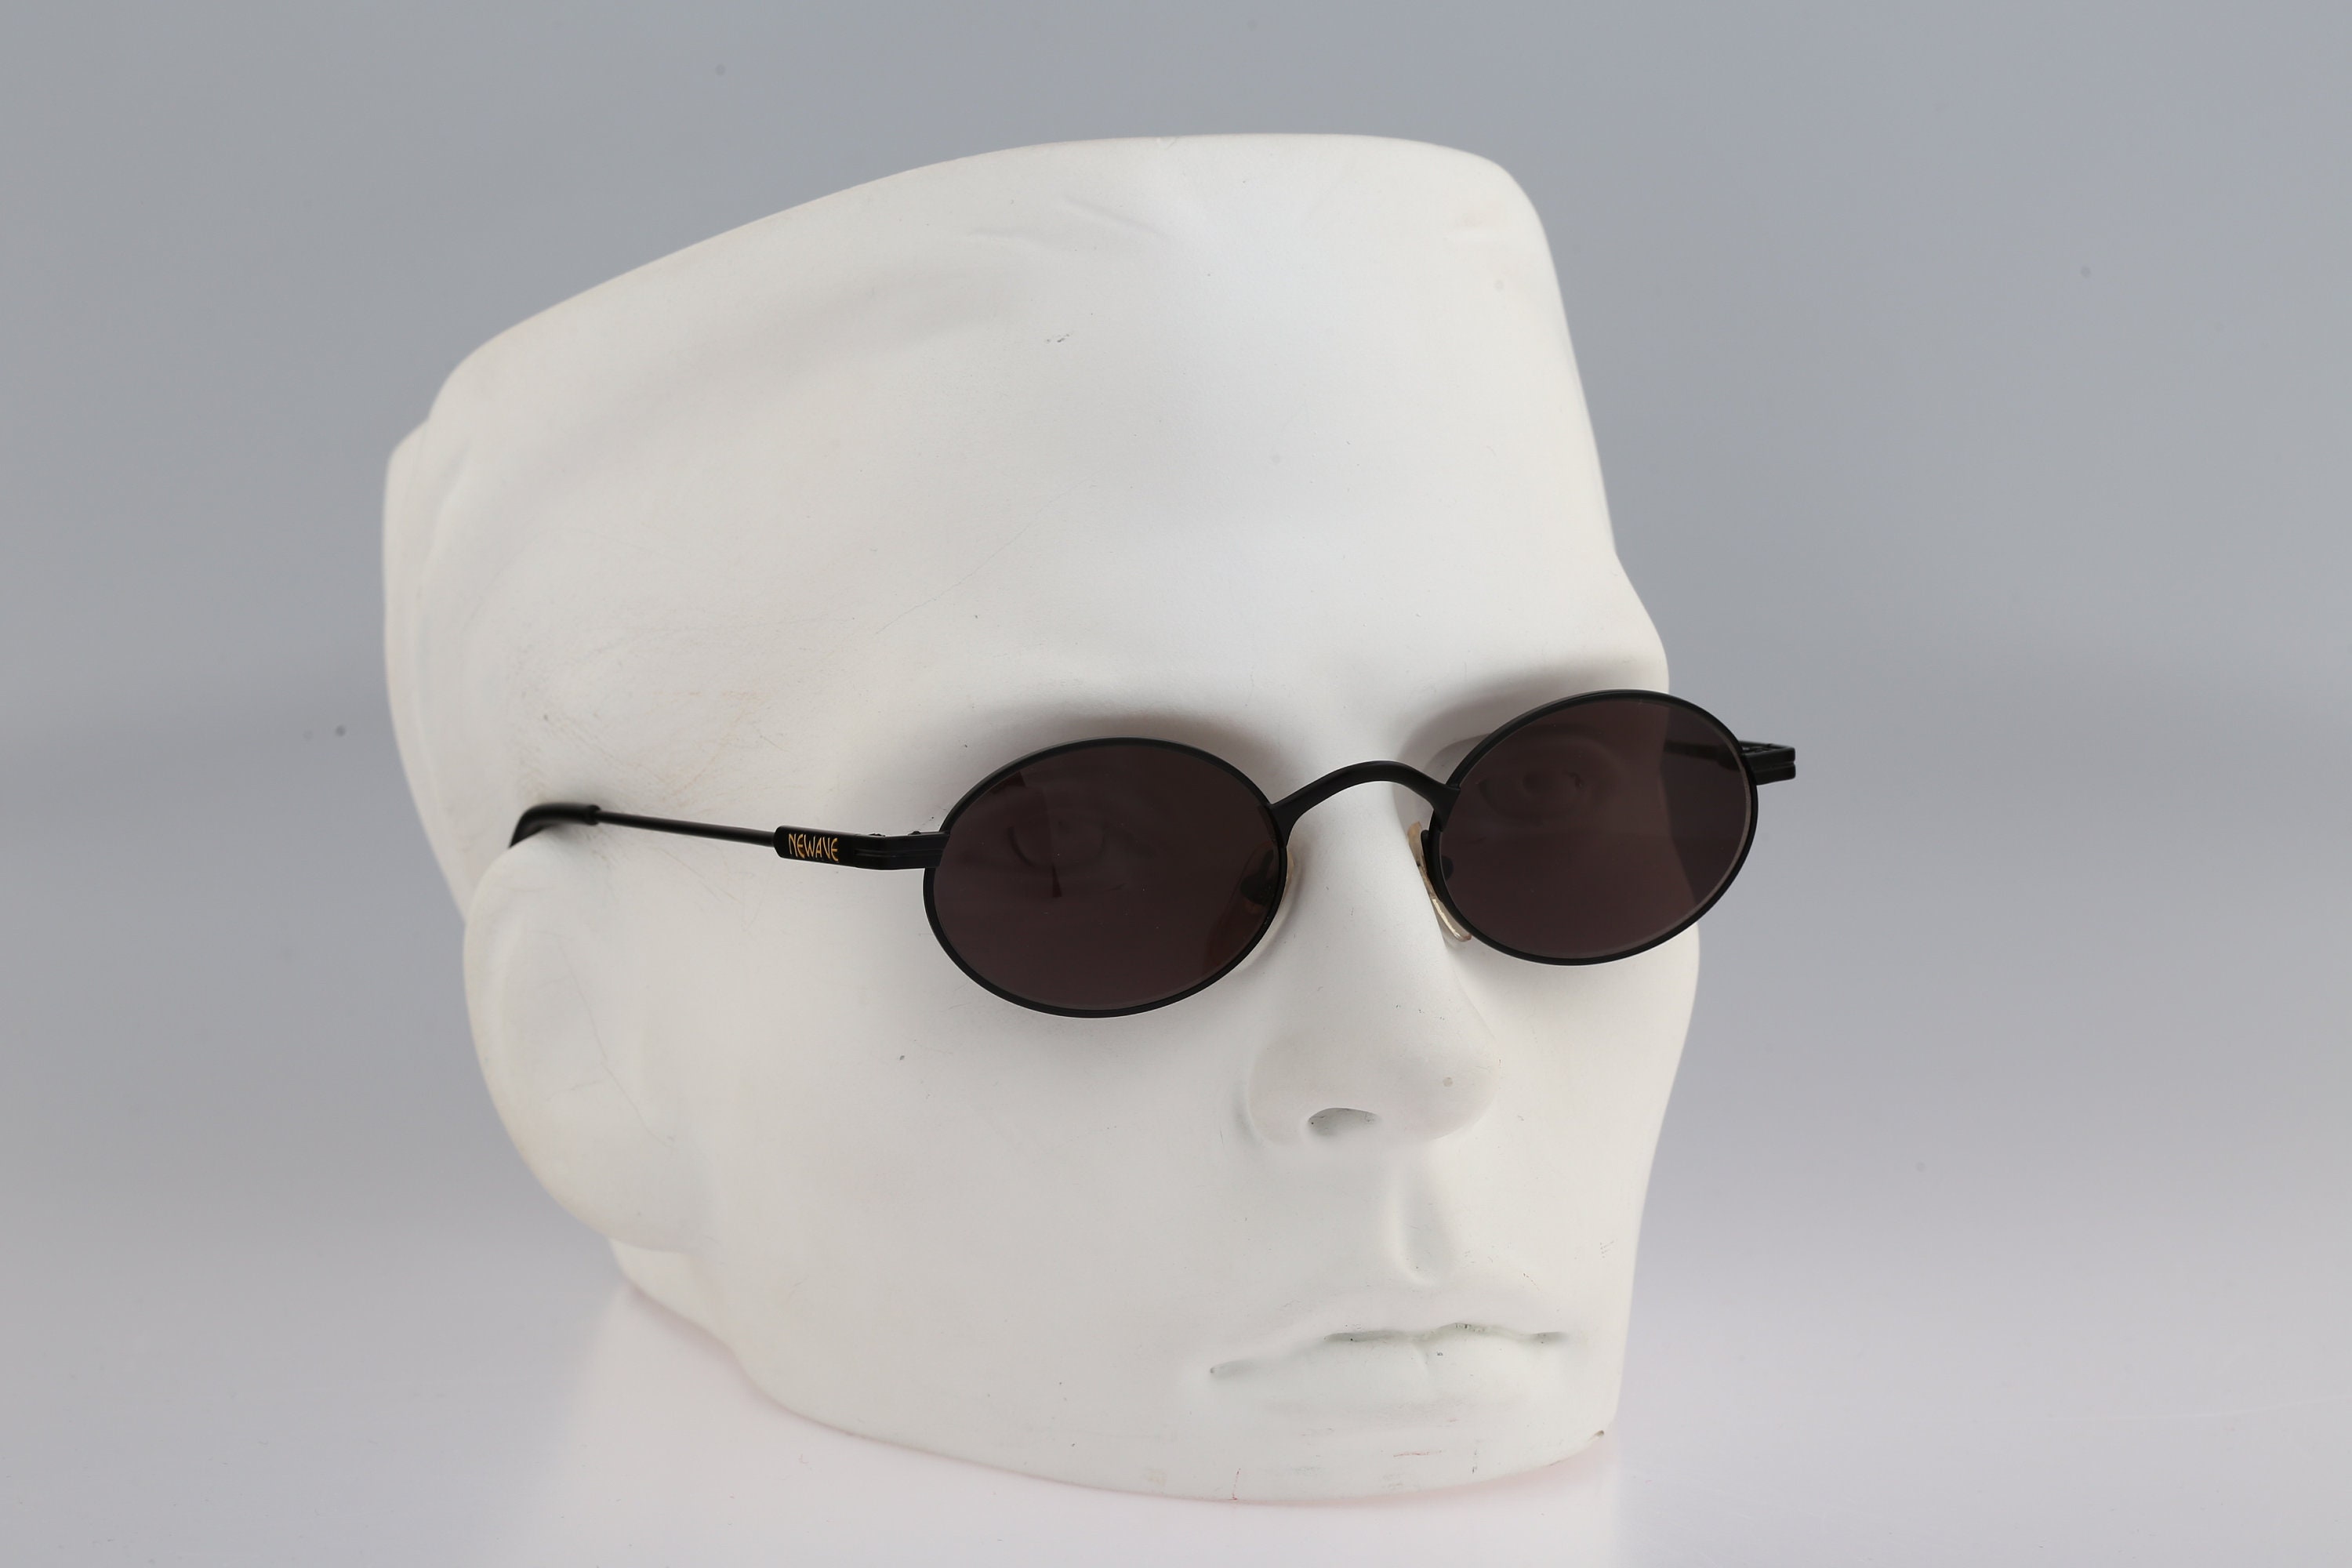 Buy Royal Son Men Round Sunglasses Black Lens (small) Online